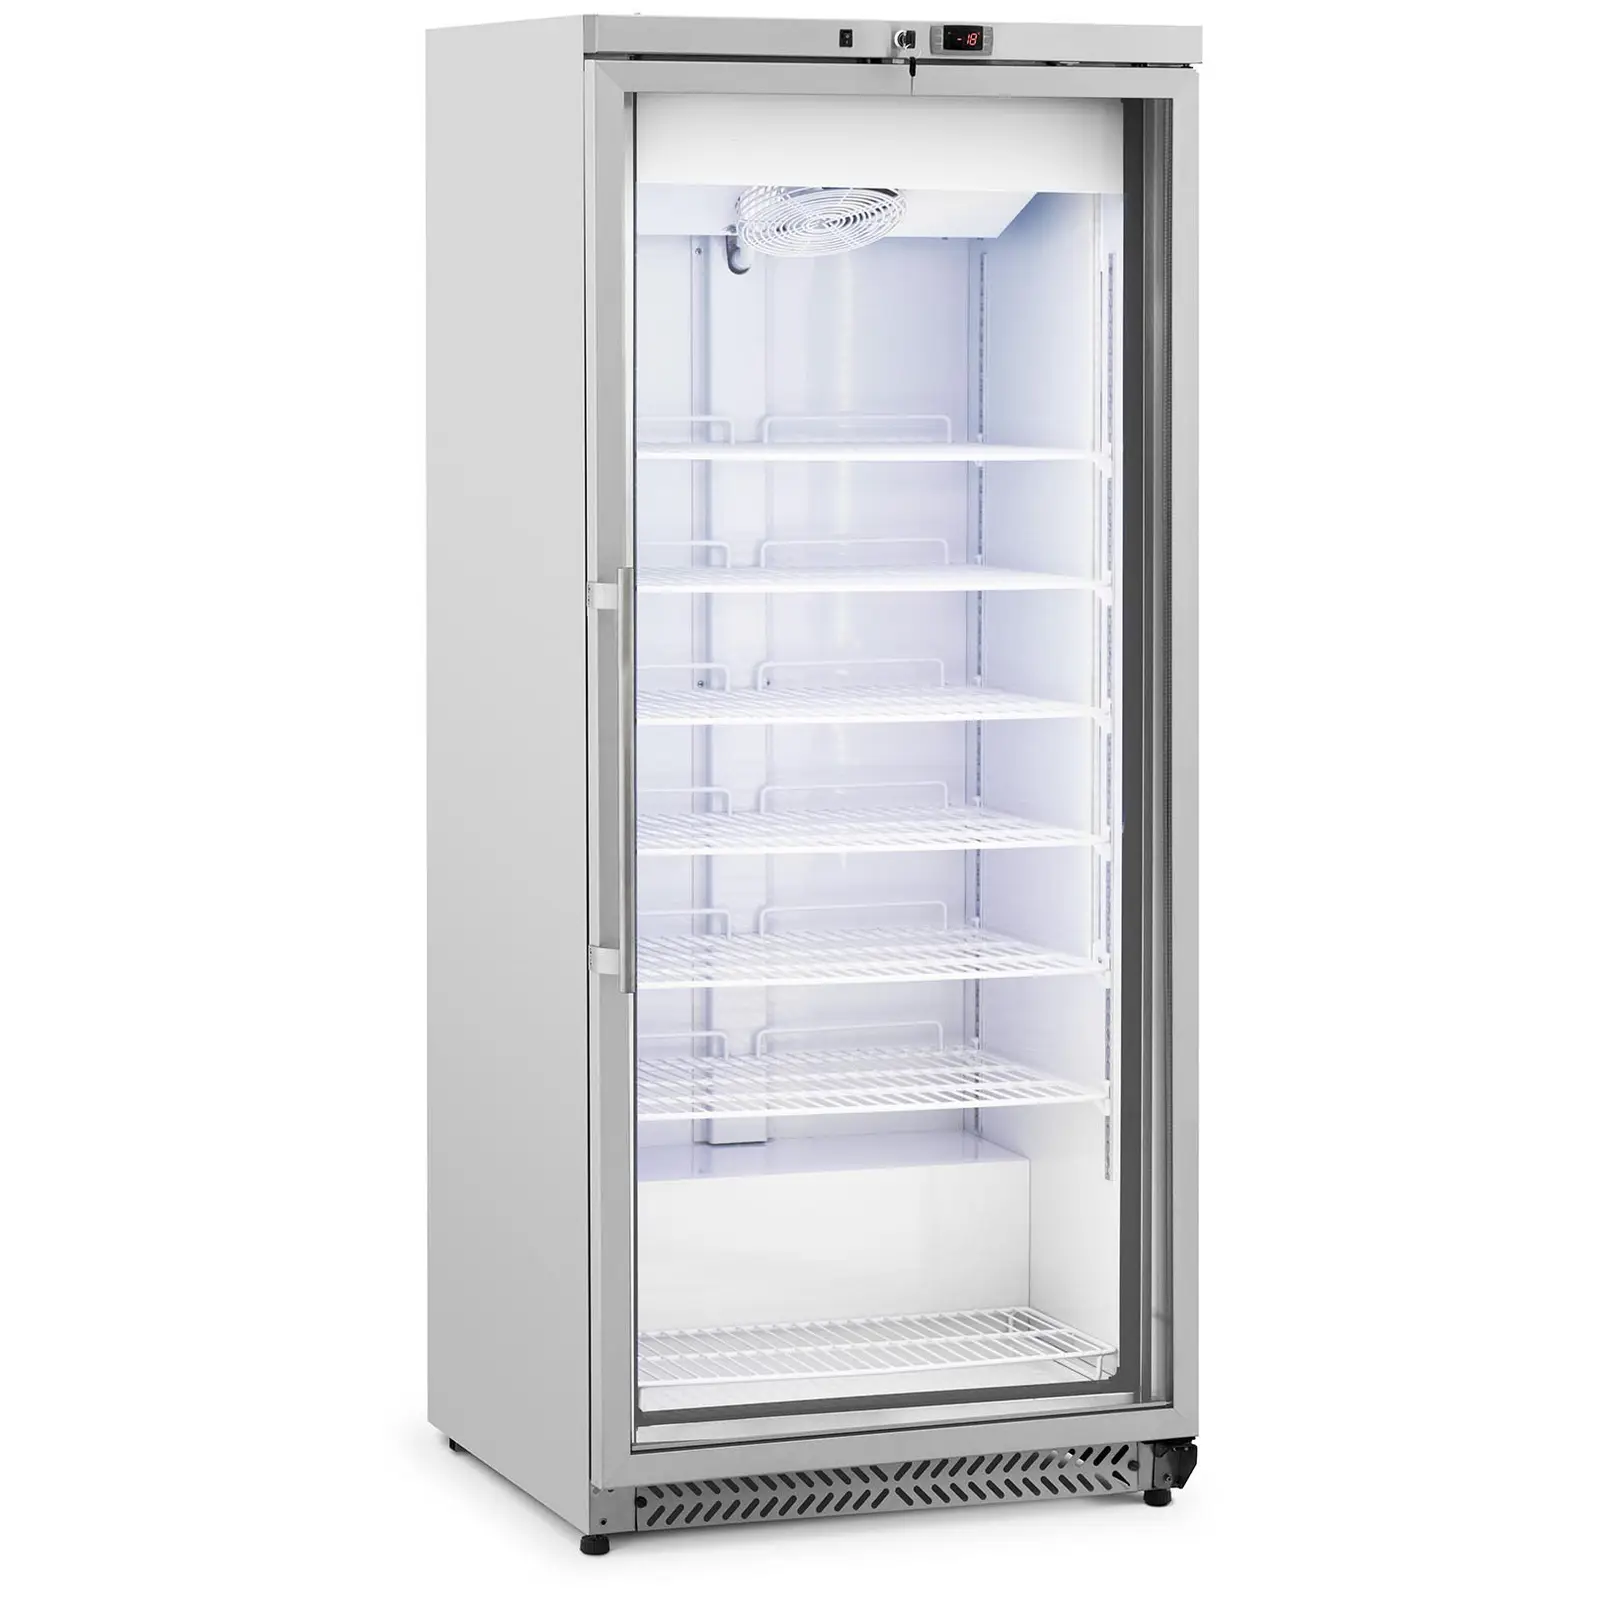 Freezer - 580 L - Royal Catering - glass door - Silver - refrigerant R290